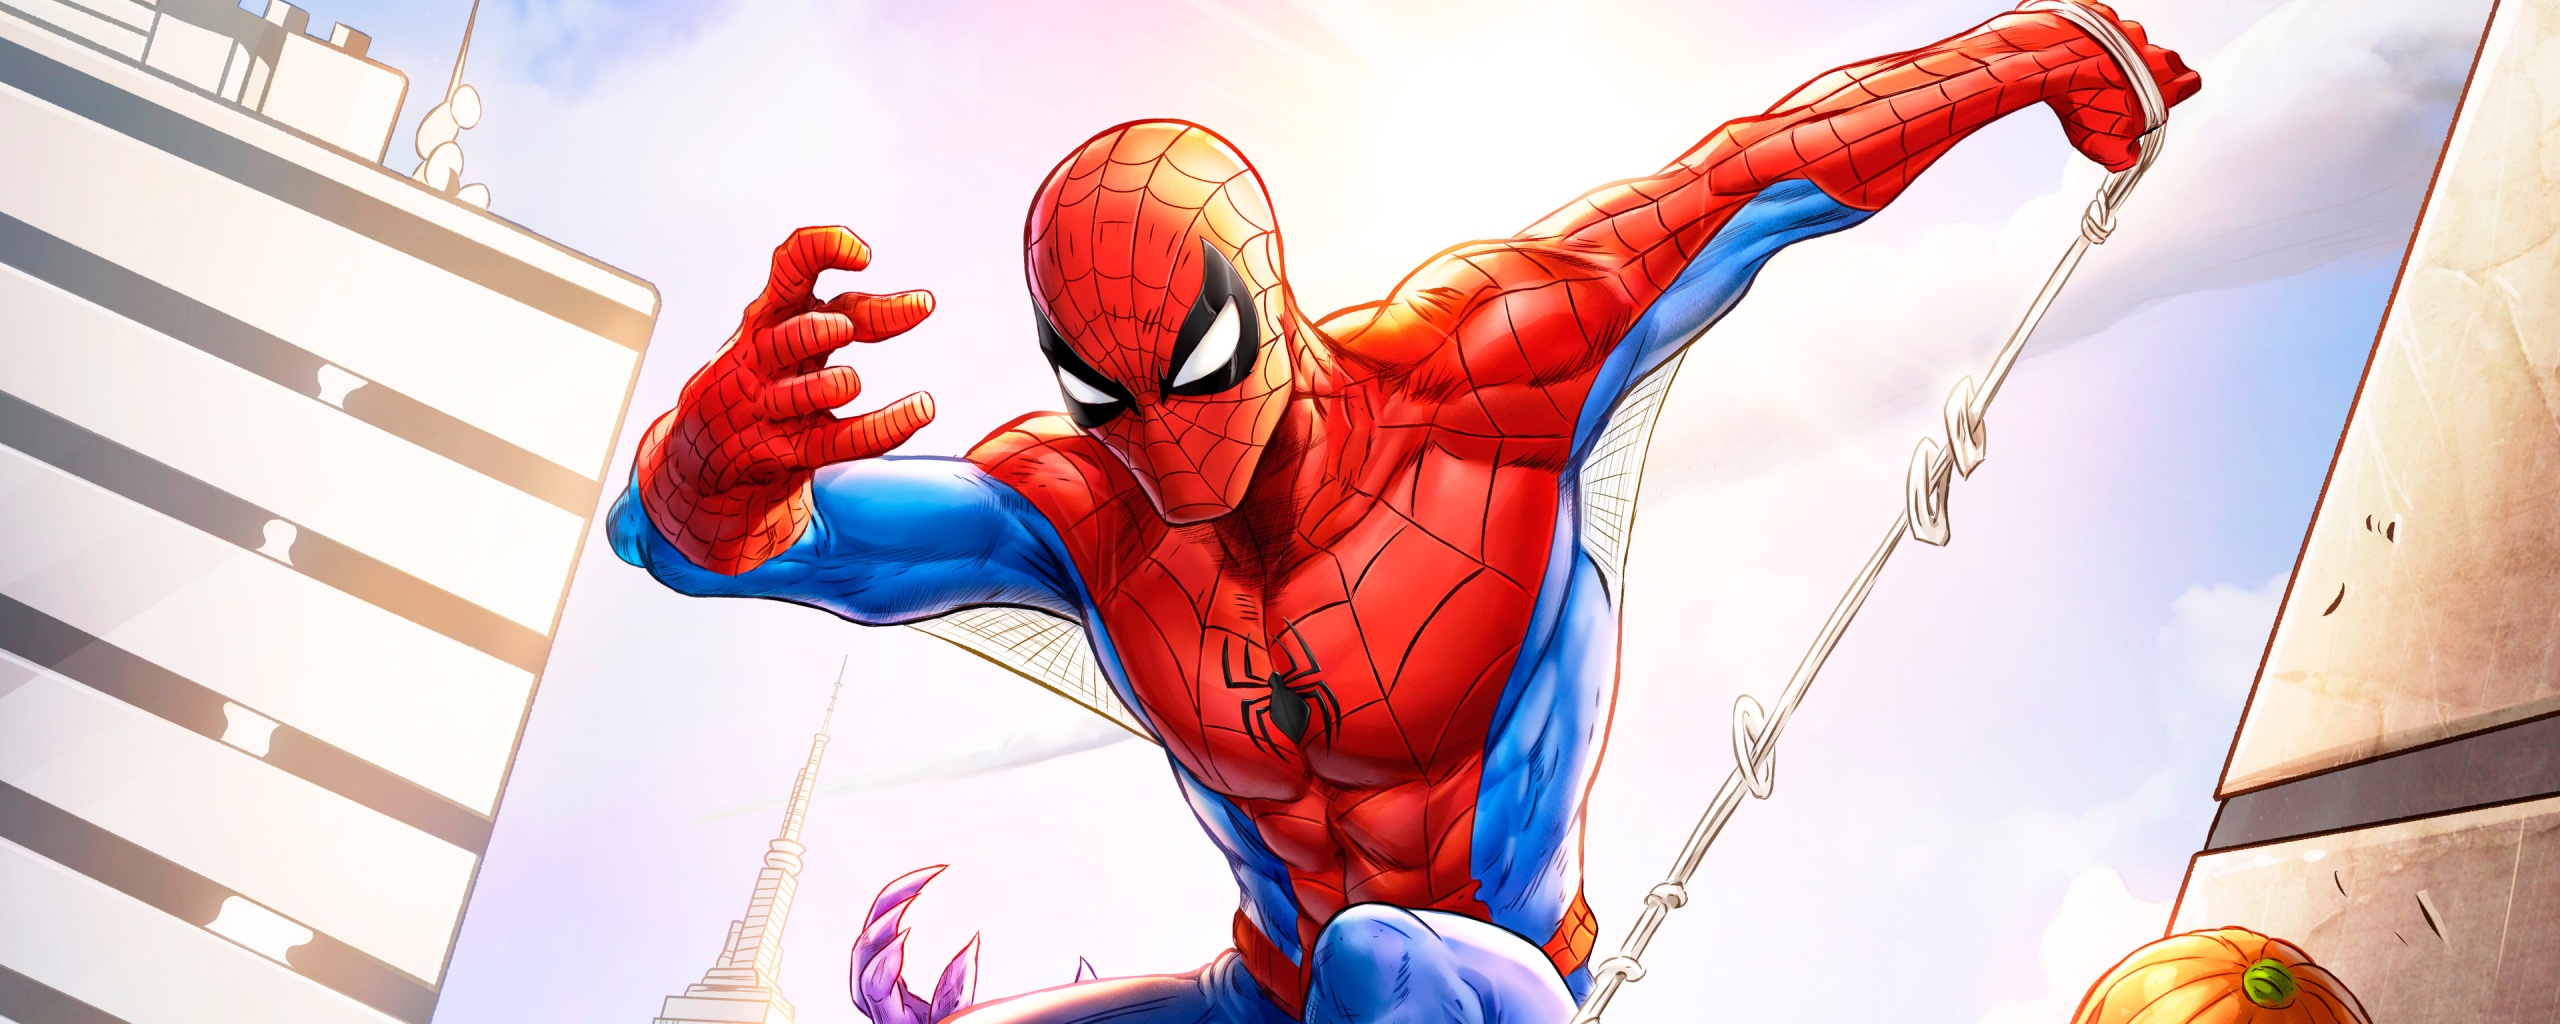 5k Spiderman 2018 - 4k Wallpapers - 40.000+ ipad wallpapers 4k - 4k ...